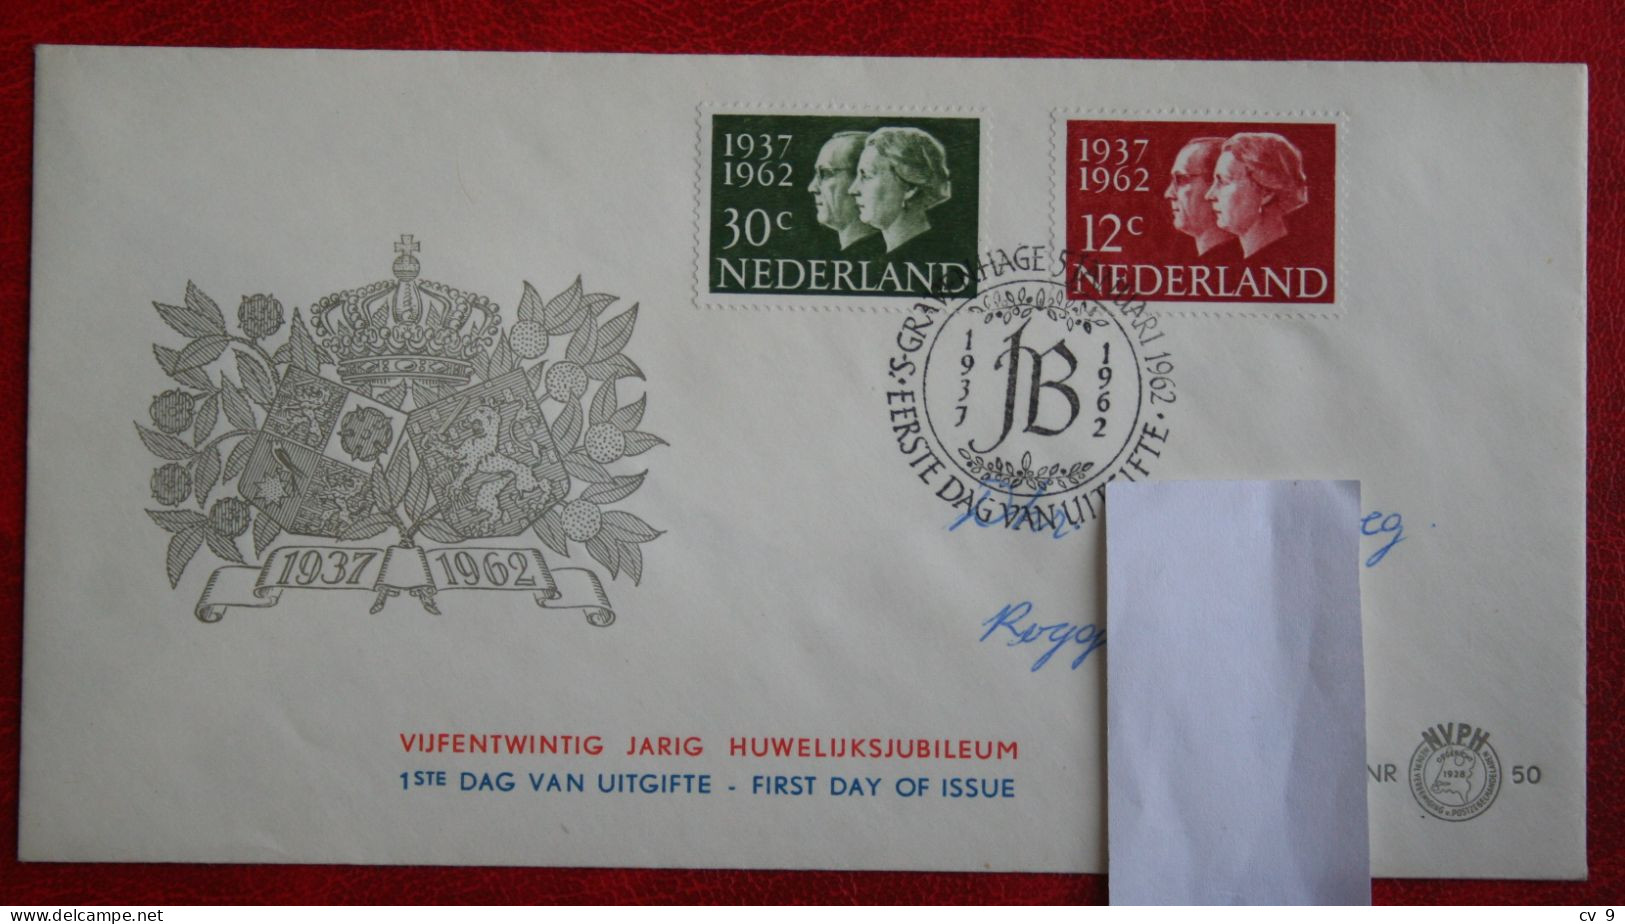 FDC NVPH E50 50 Juliana En Bernard NVPH 764-765 (Mi 772-773) With Adress 1962 NEDERLAND NIEDERLANDE NETHERLANDS - FDC